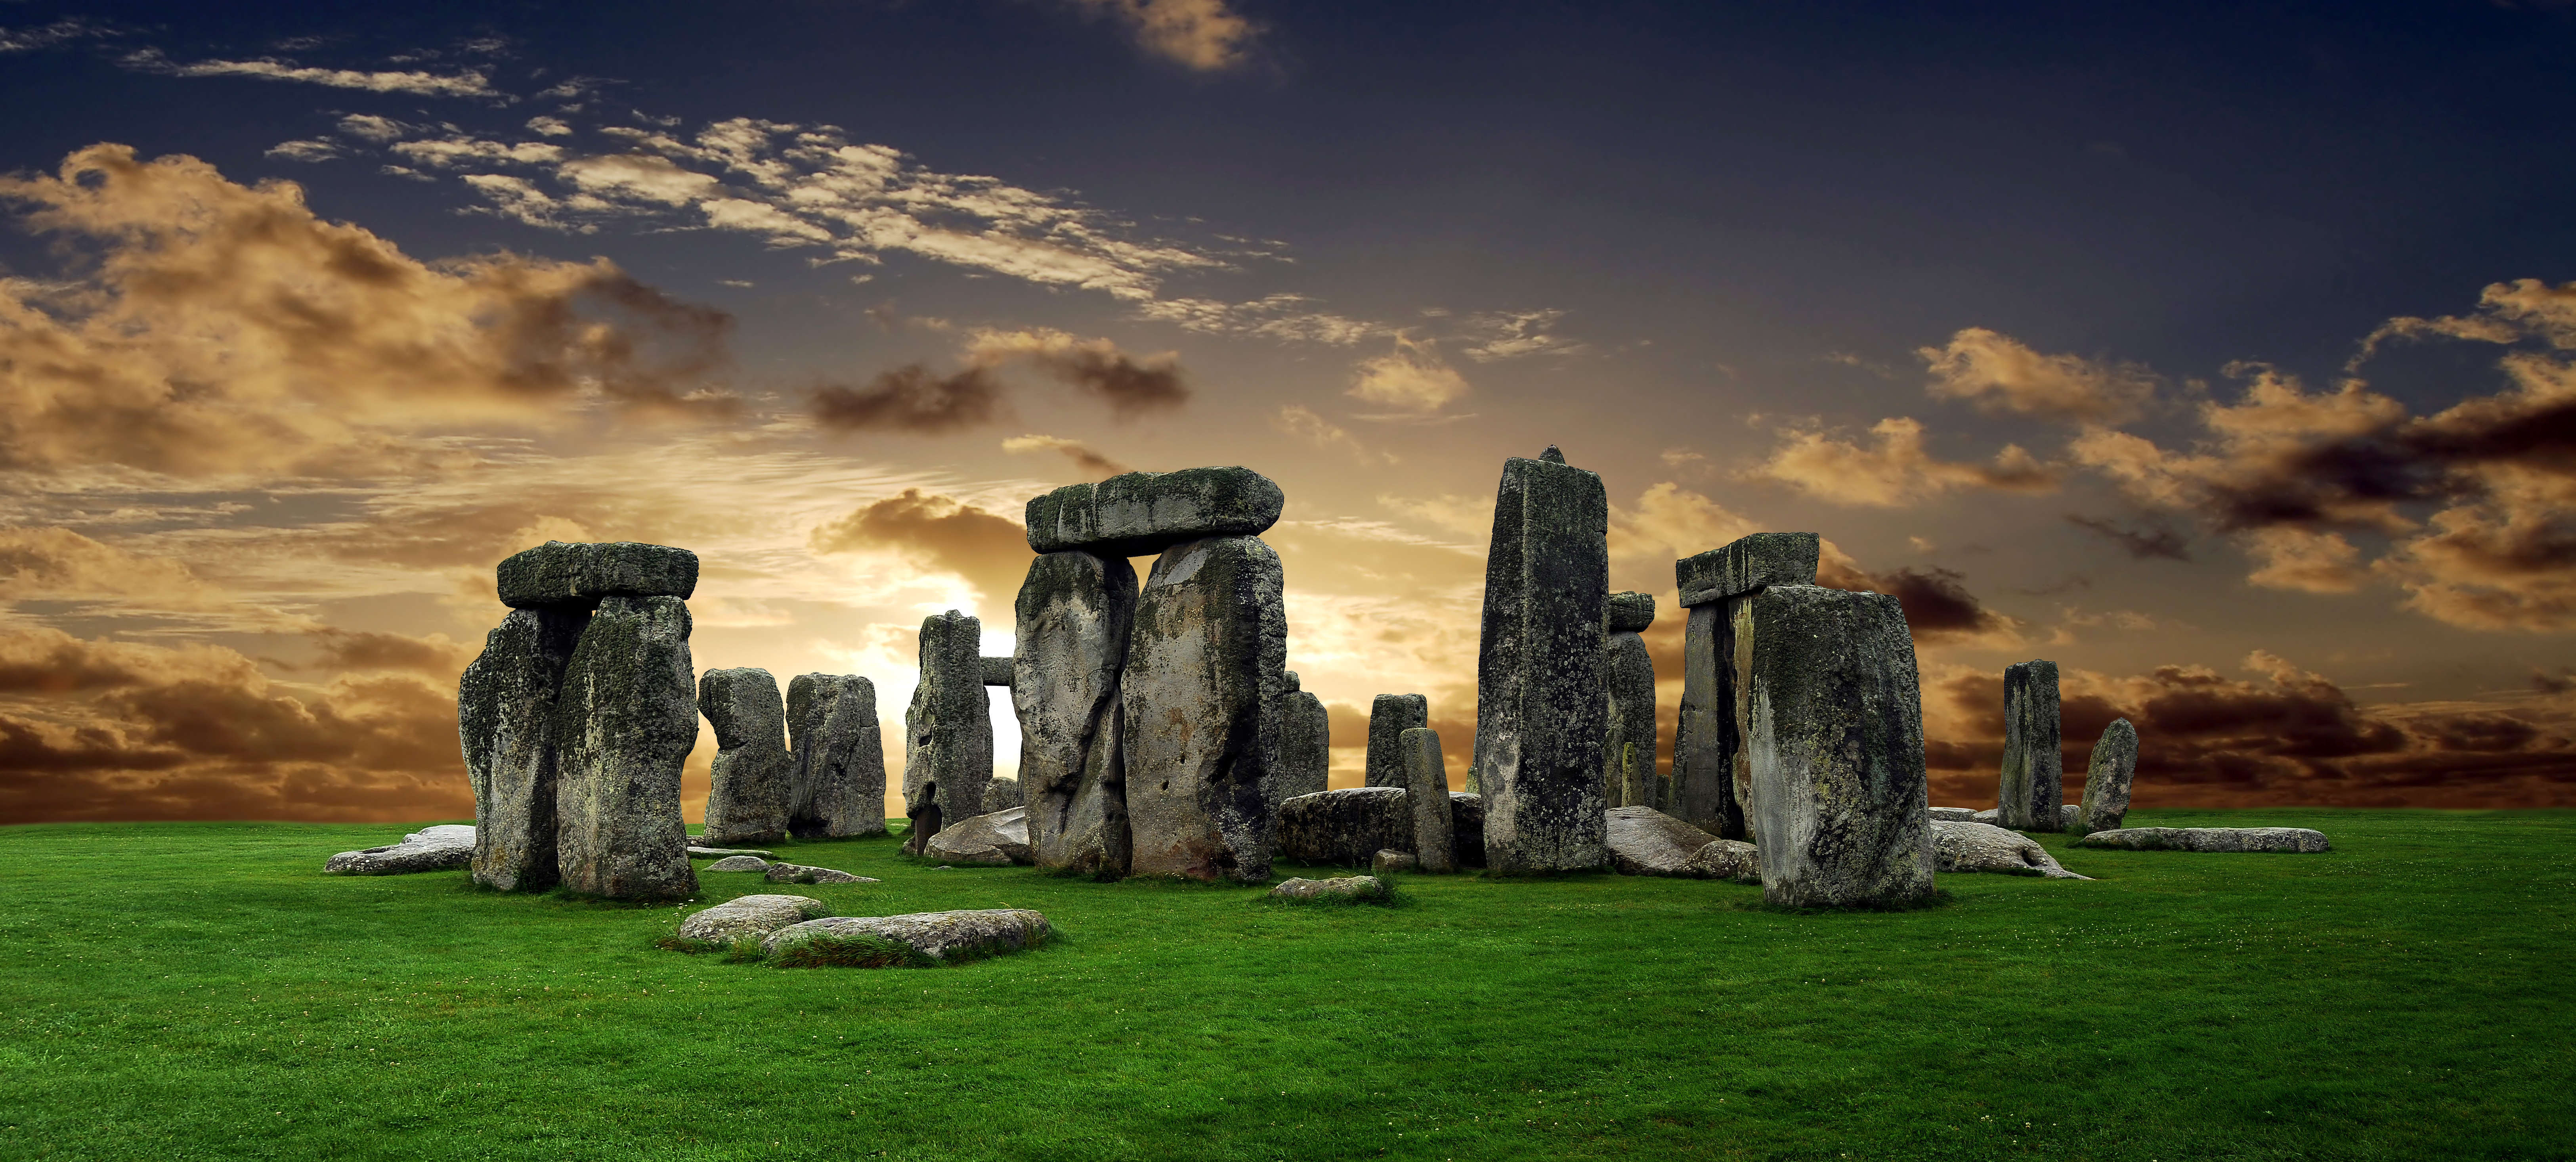 What Did Stonehenge Look Like